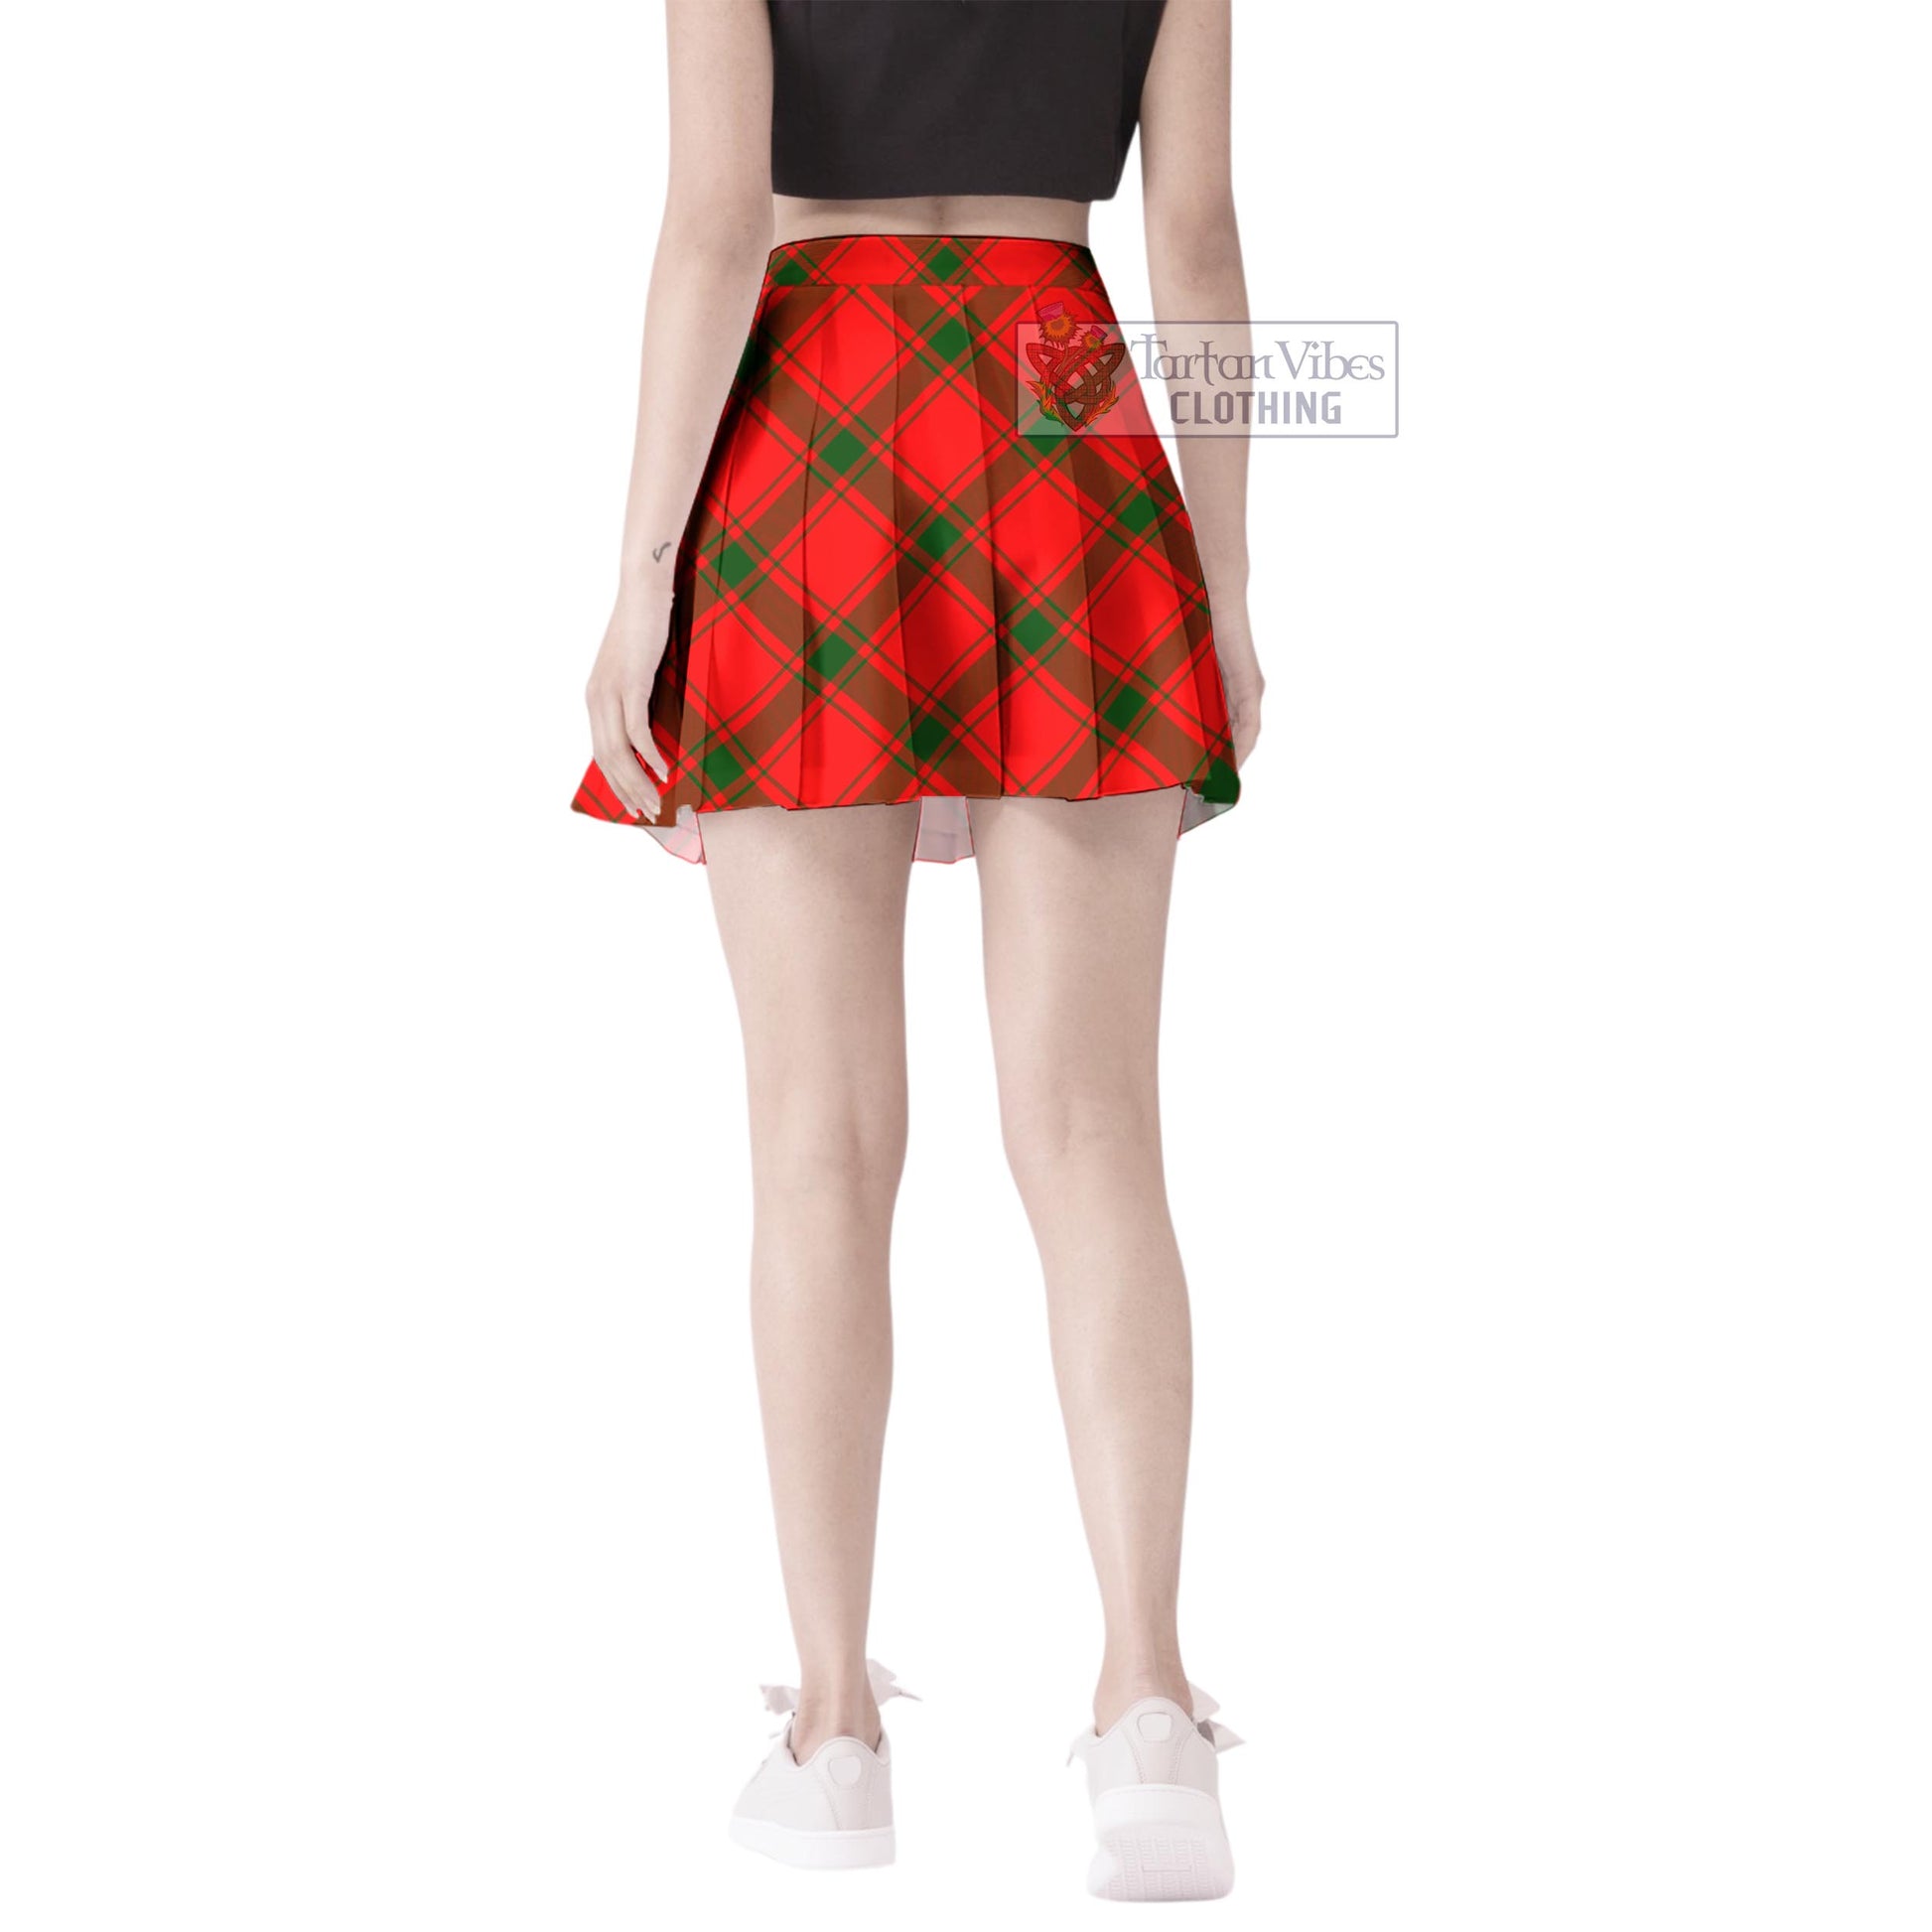 Tartan Vibes Clothing Darroch Tartan Women's Plated Mini Skirt